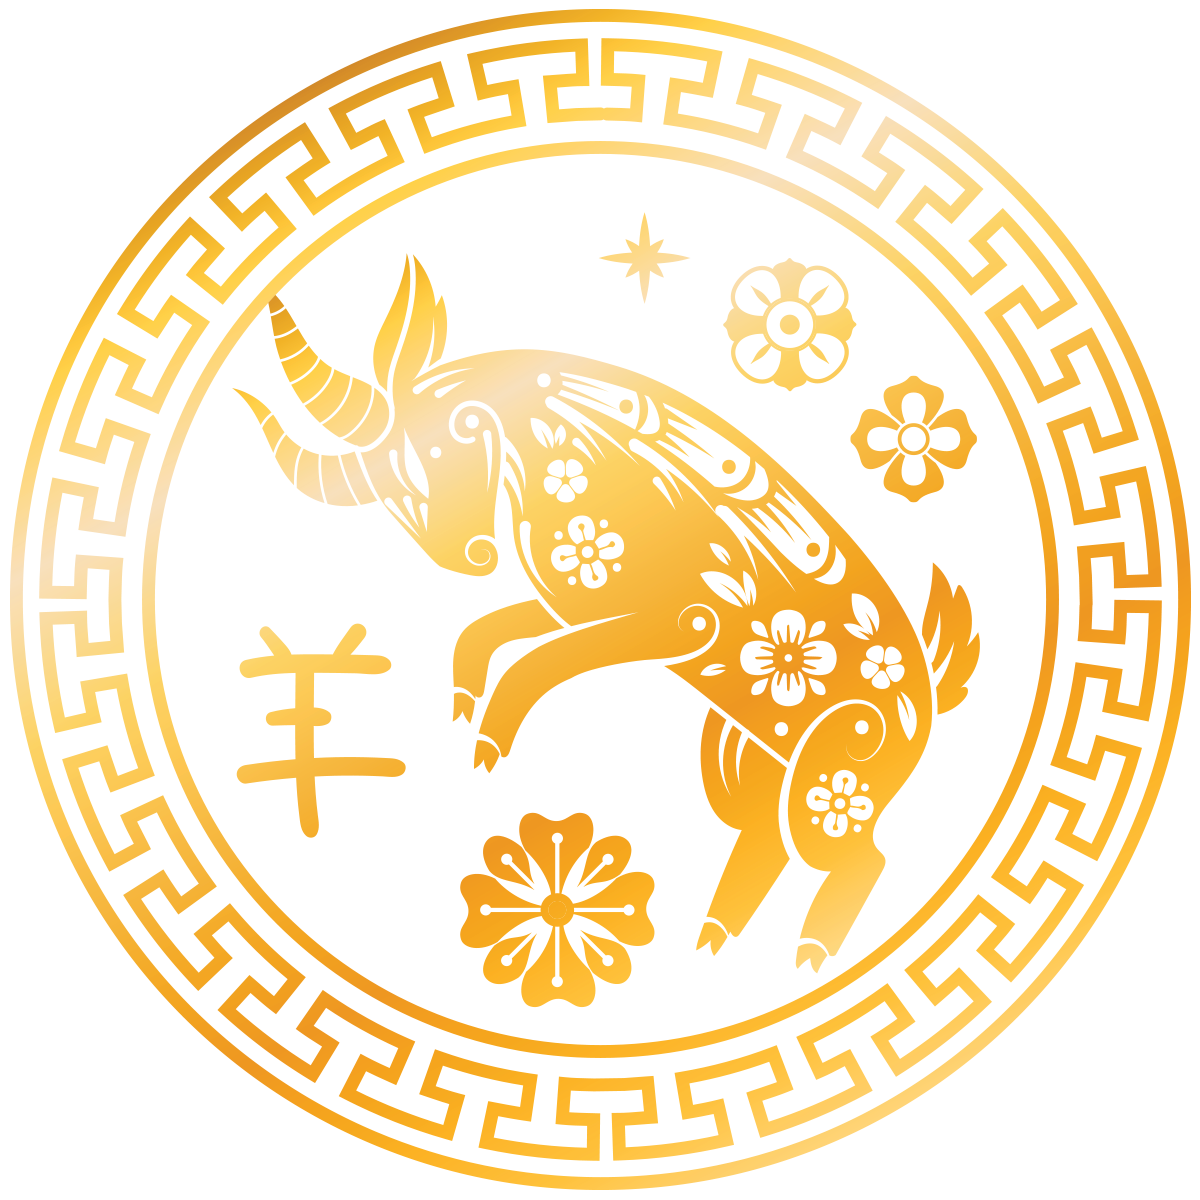 China Sichuan Horoscopes: The Goat